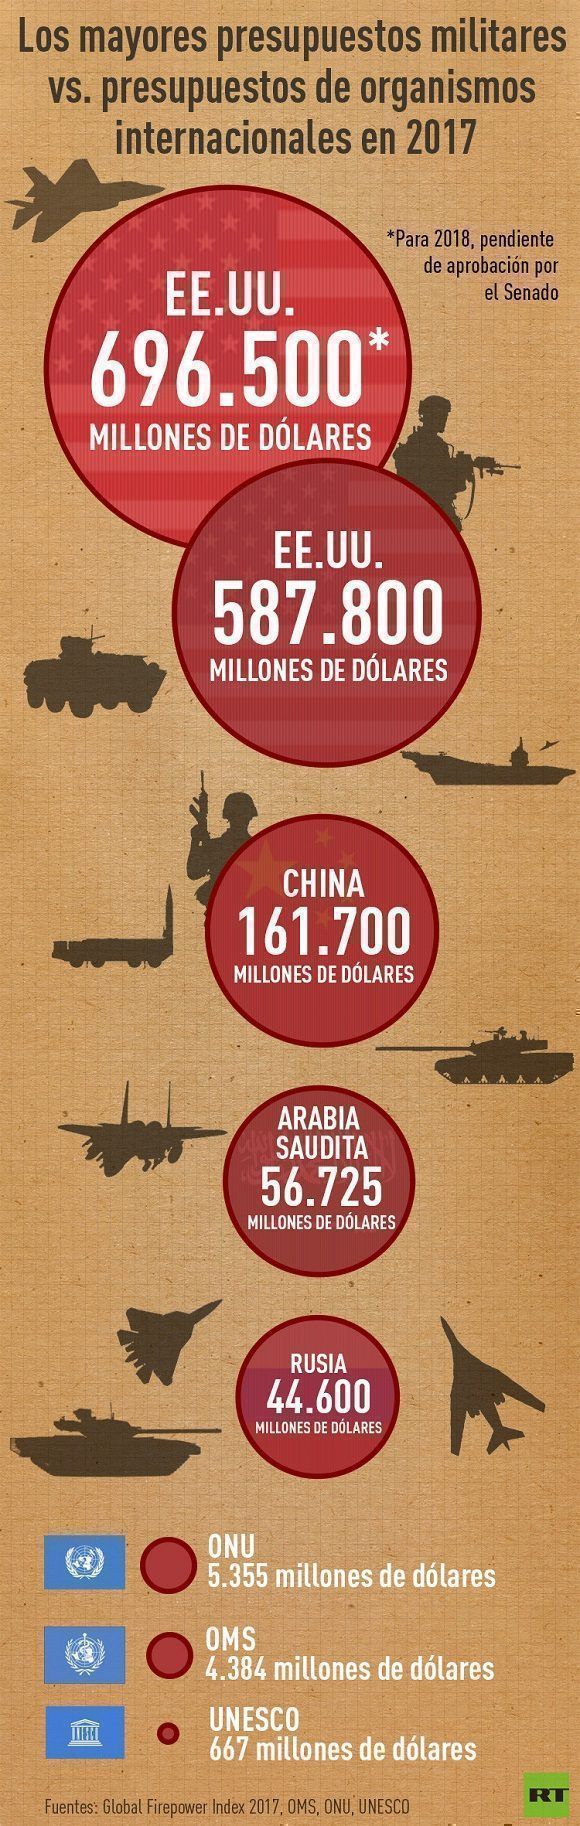 grafica-presupuestos-militares